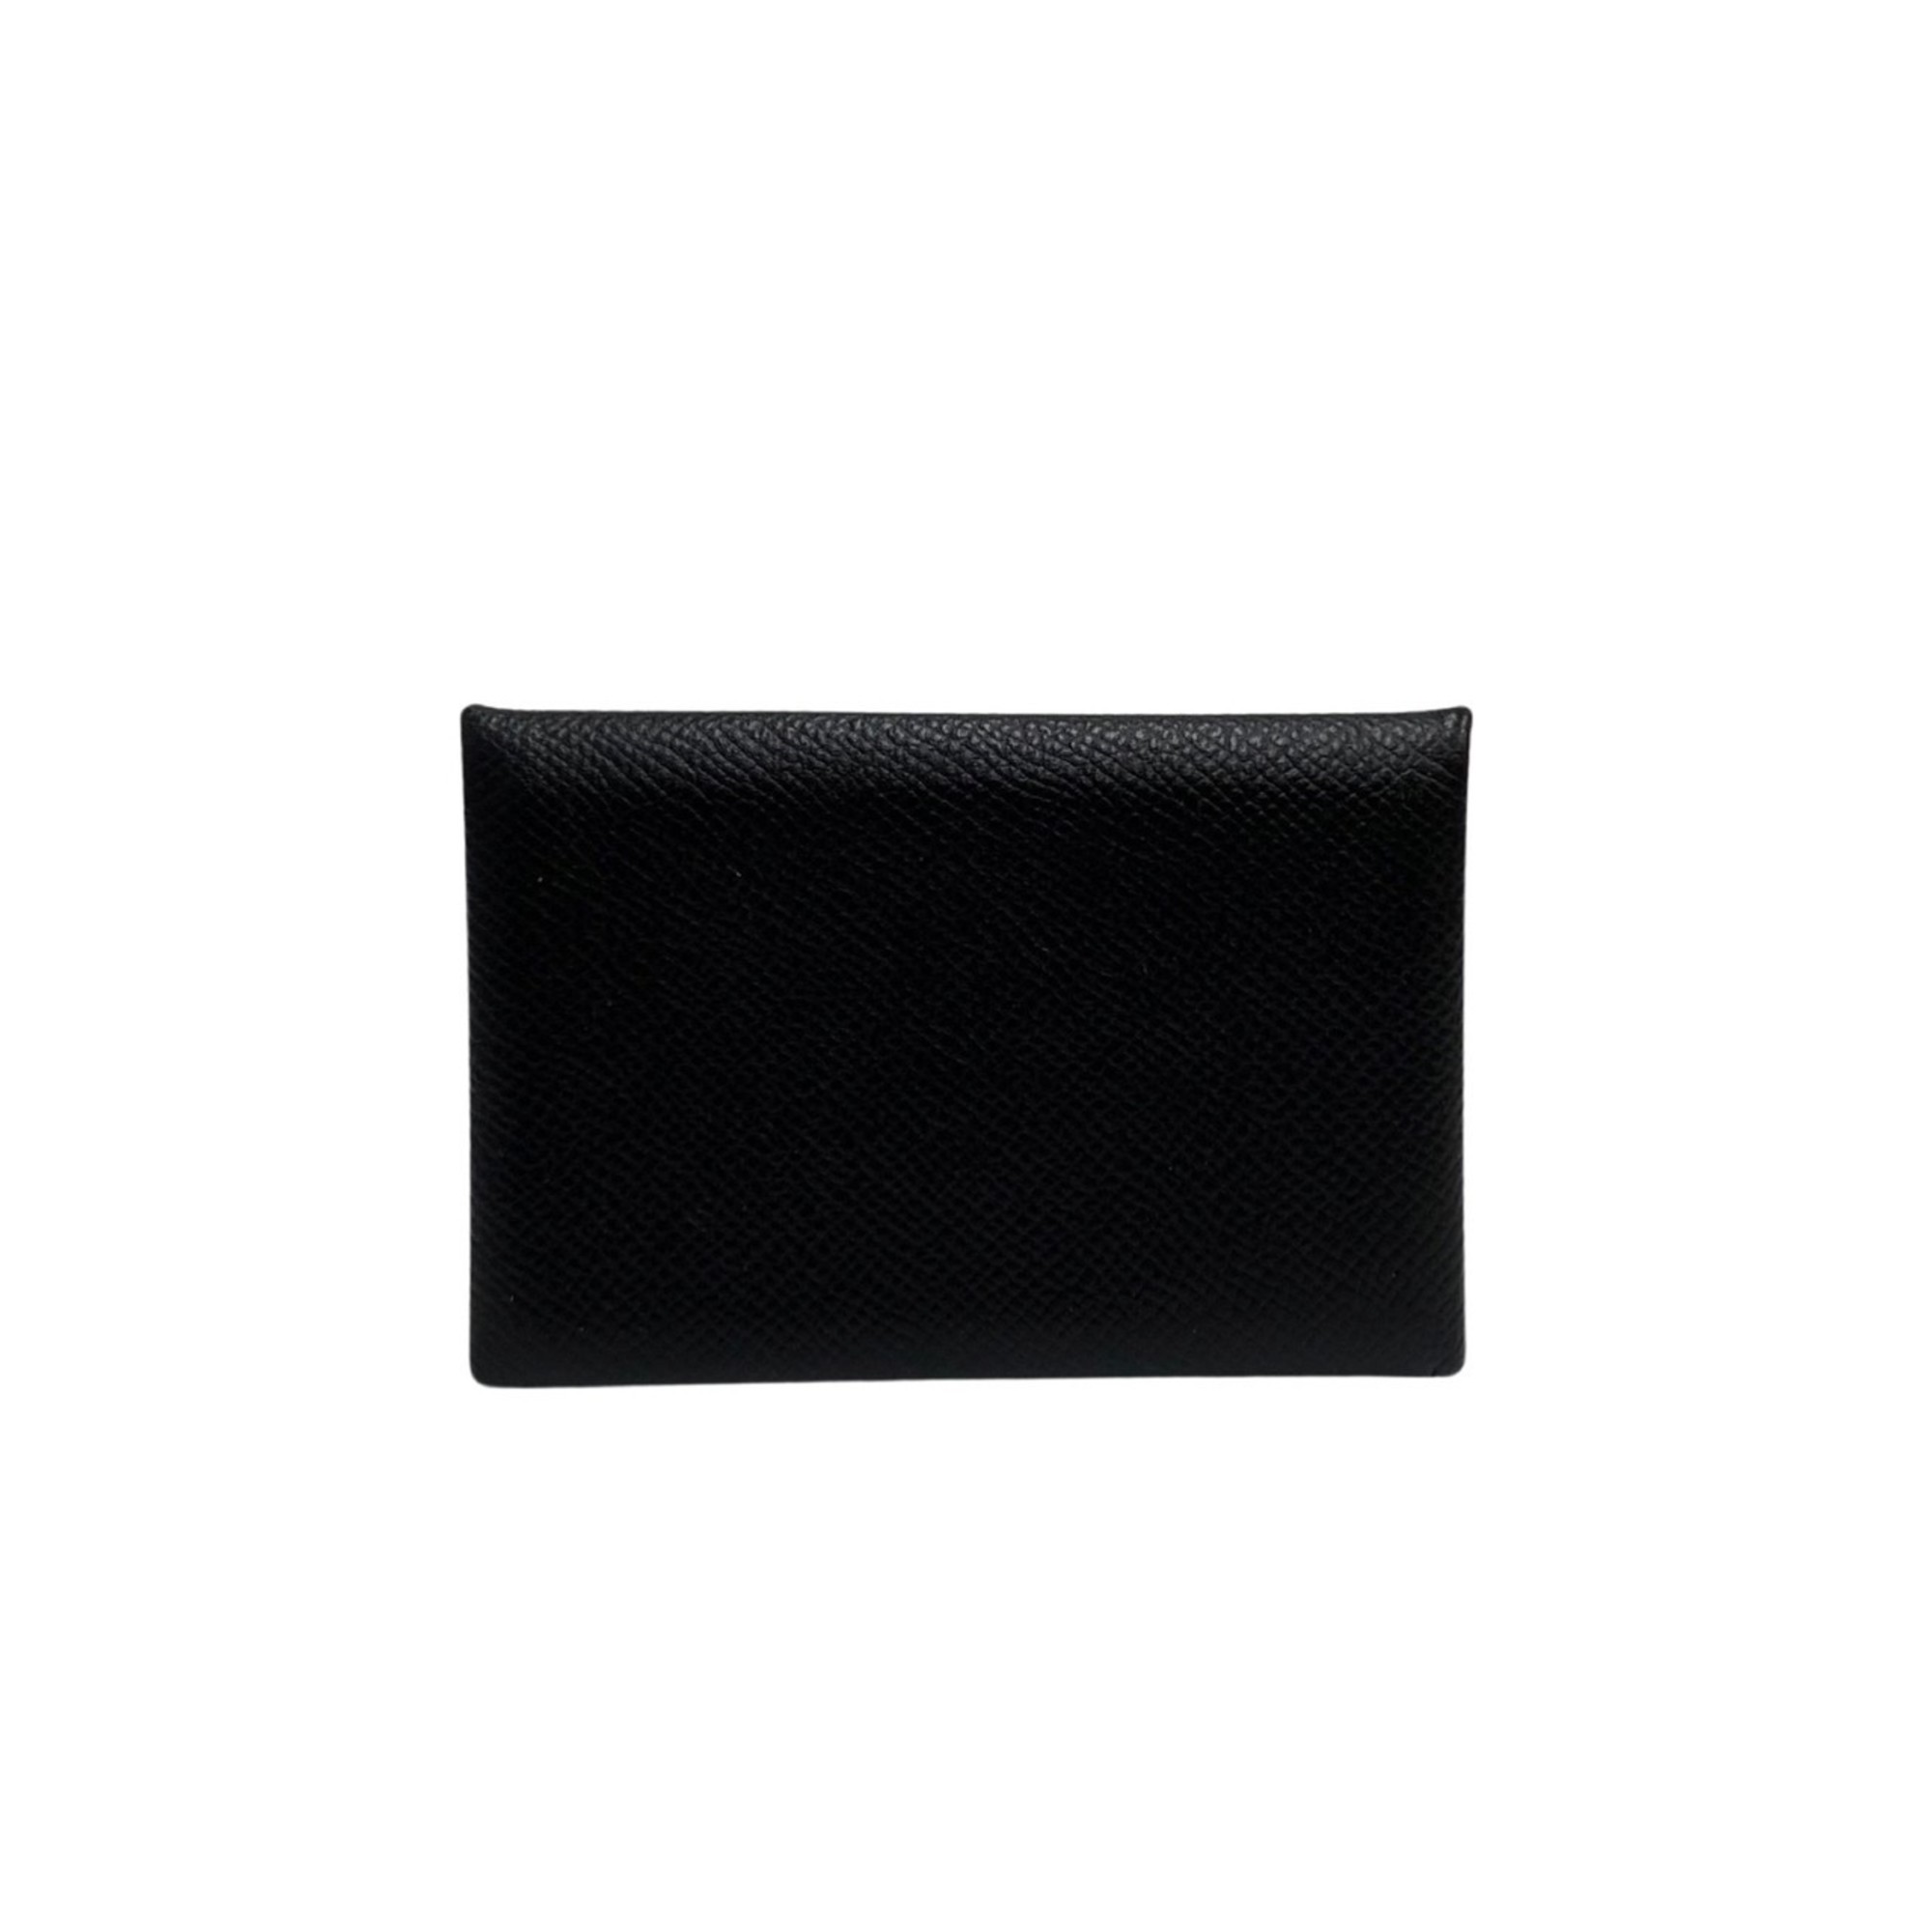 Z engraved HERMES Hermes Calvi Leather Genuine Card Case Business Holder Coin Mini Wallet Black